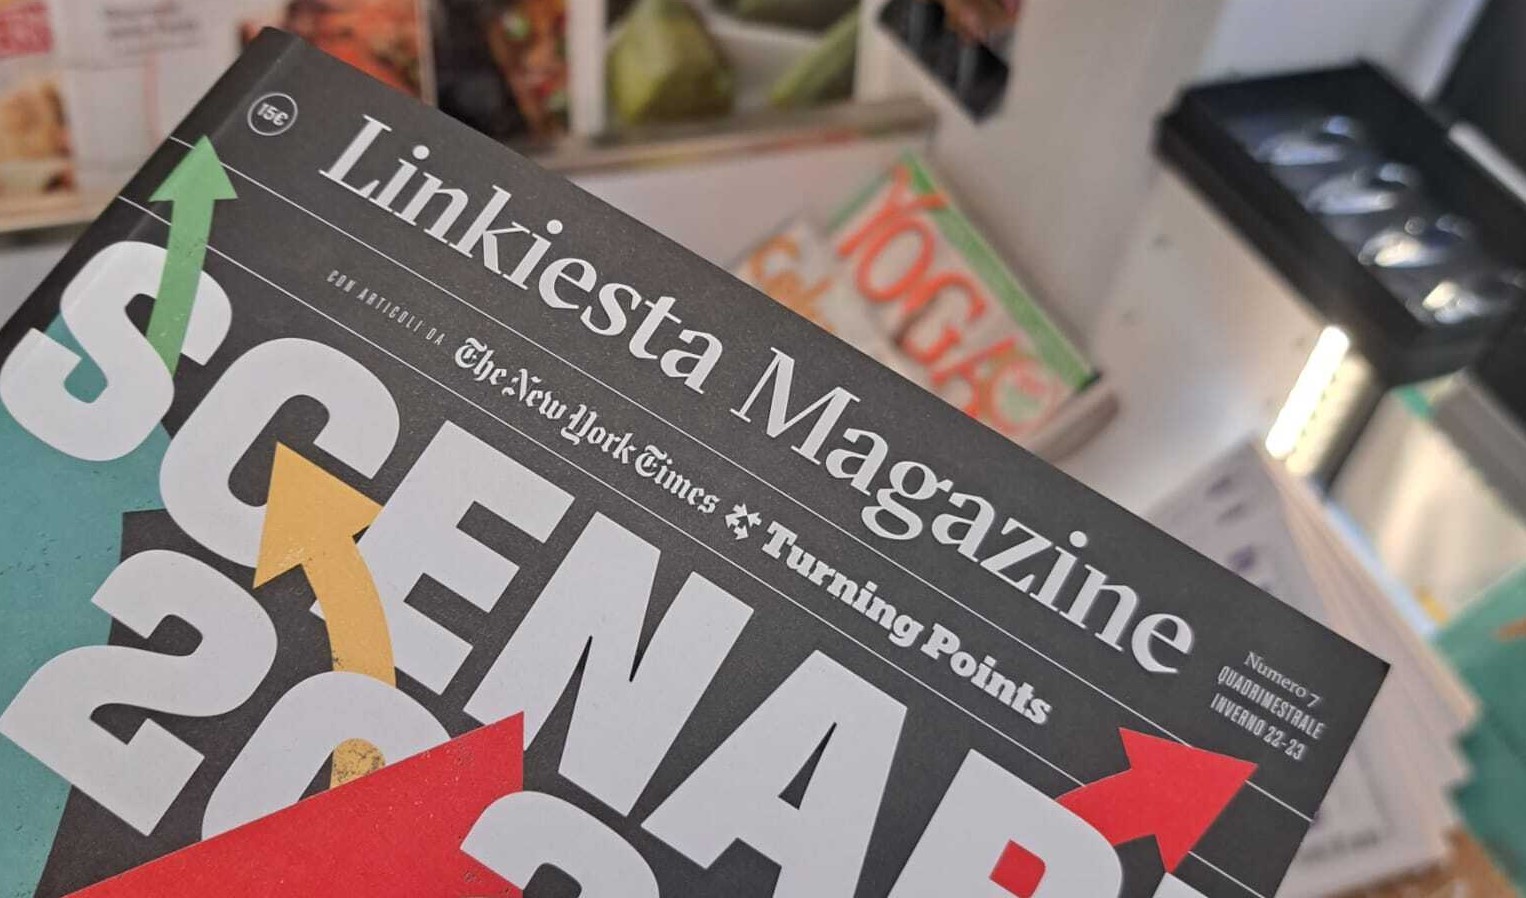 Linkiesta Magazine at one of Milan's newsagents. Credit: Jacopo Adami.